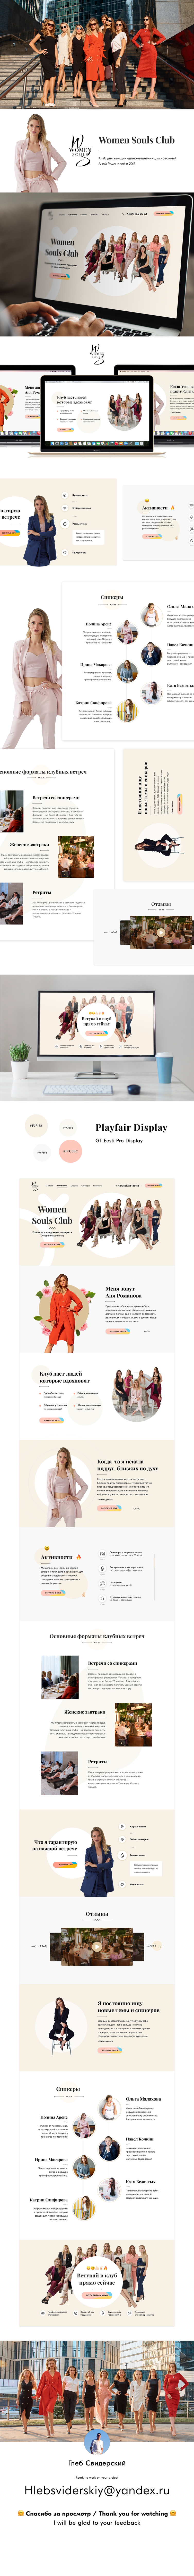 Web Design  women club ui ux landing page лендинг веб дизайн мода тренинг бизнес